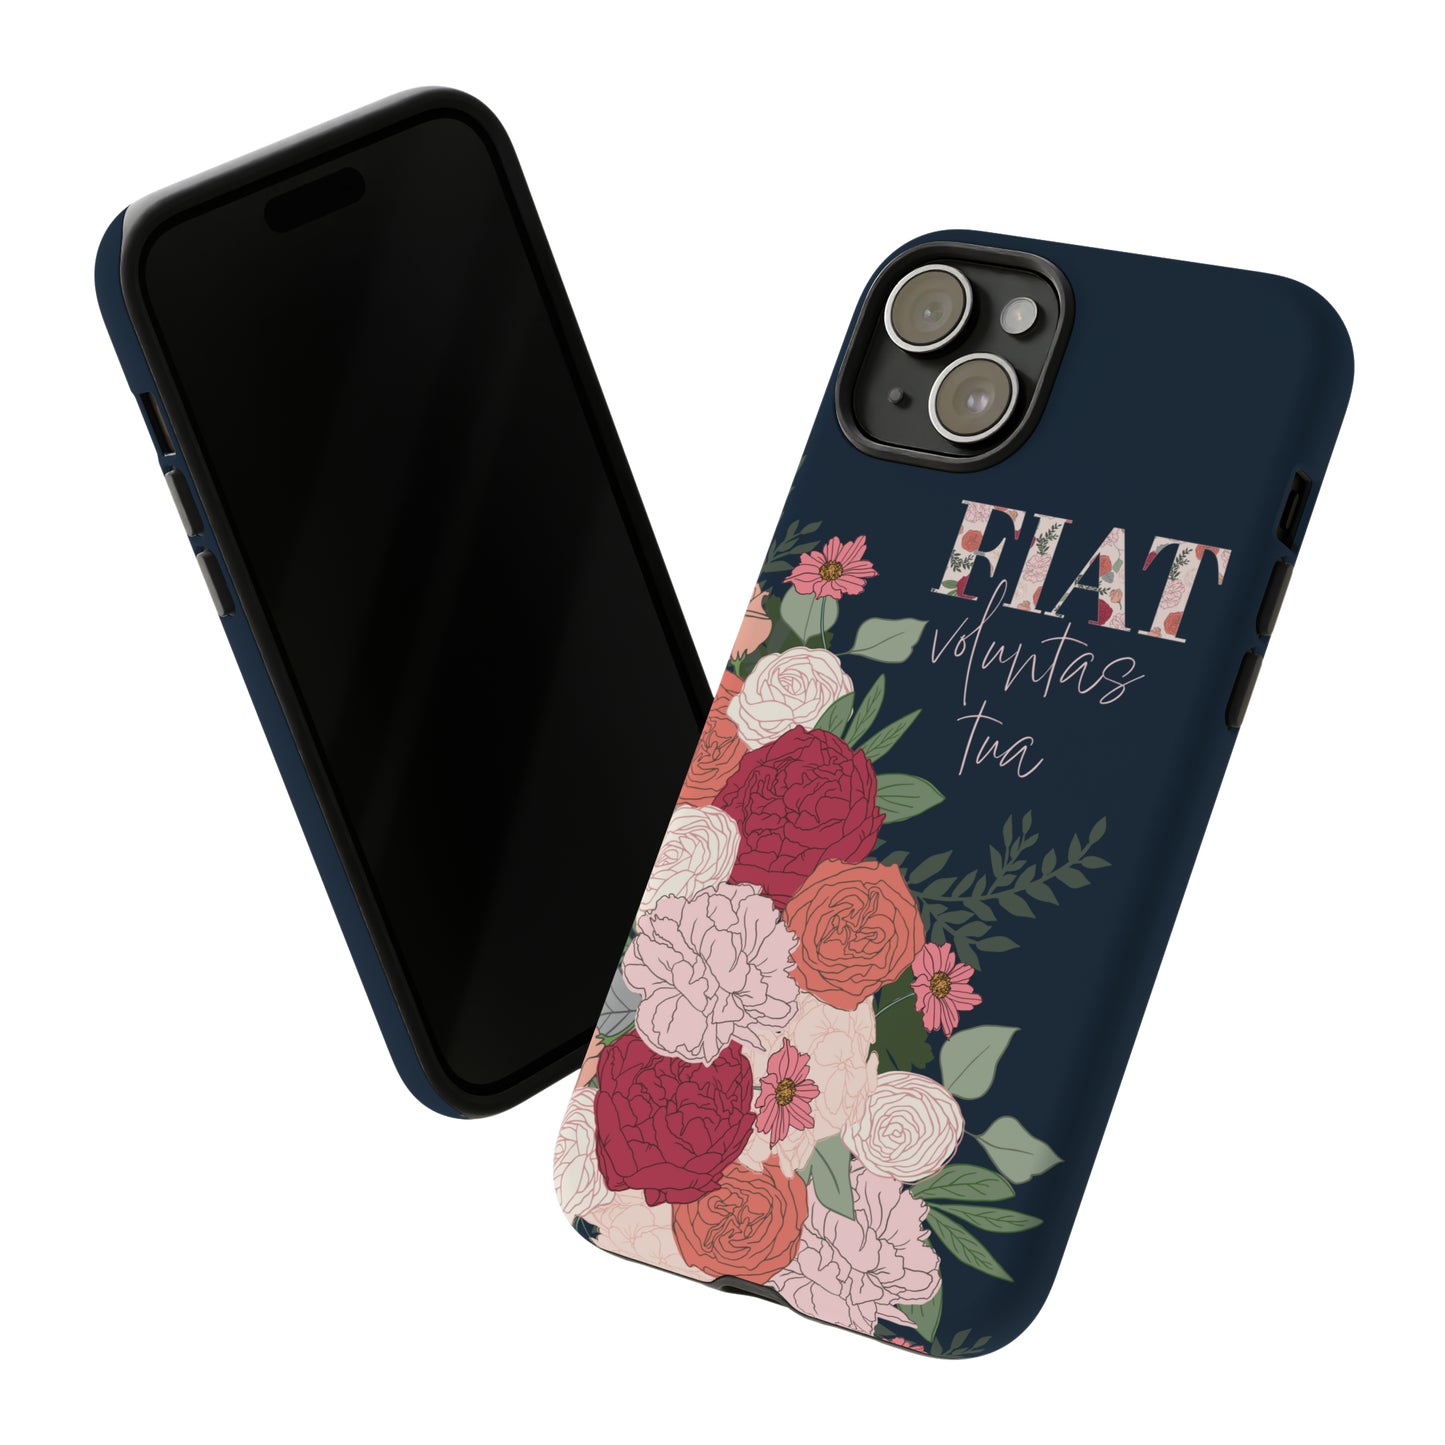 Fiat “Tough” Phone Case